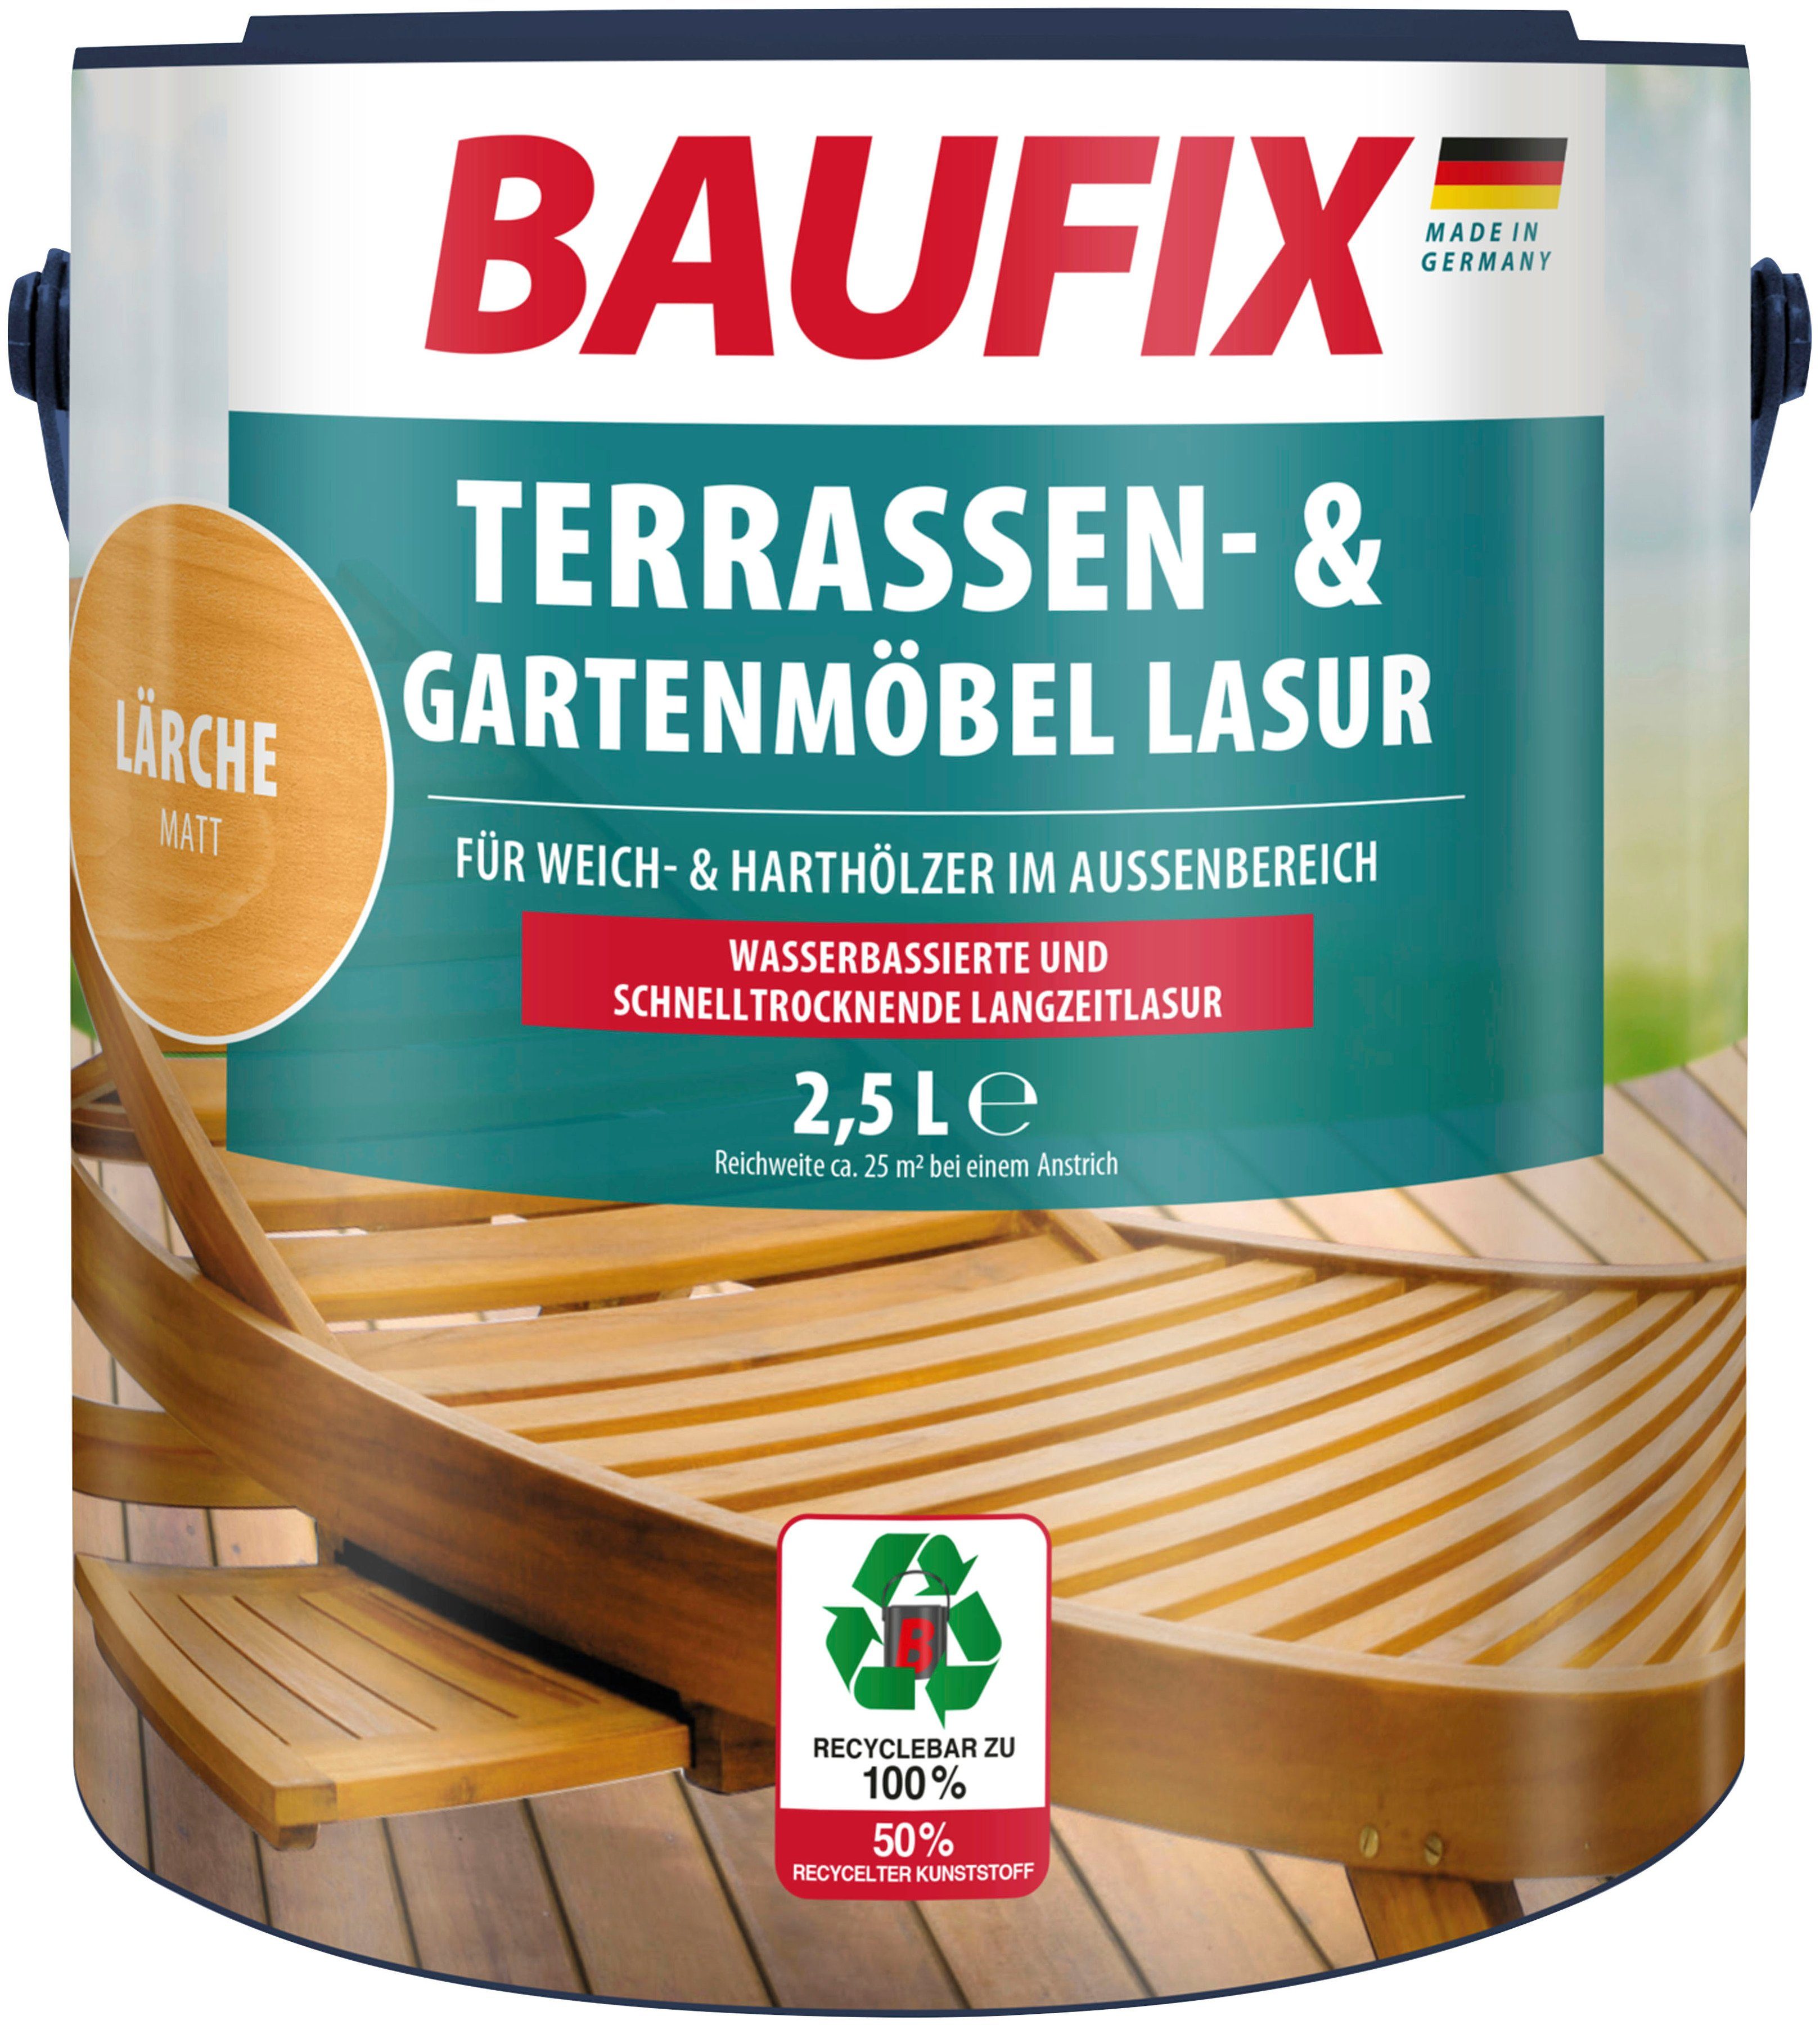 Baufix Holzöl Terrassen- & Gartenmöbel-Lasur, wasserbasiert, schnell trocknend, kein abblättern, 2,5L, matt lärche